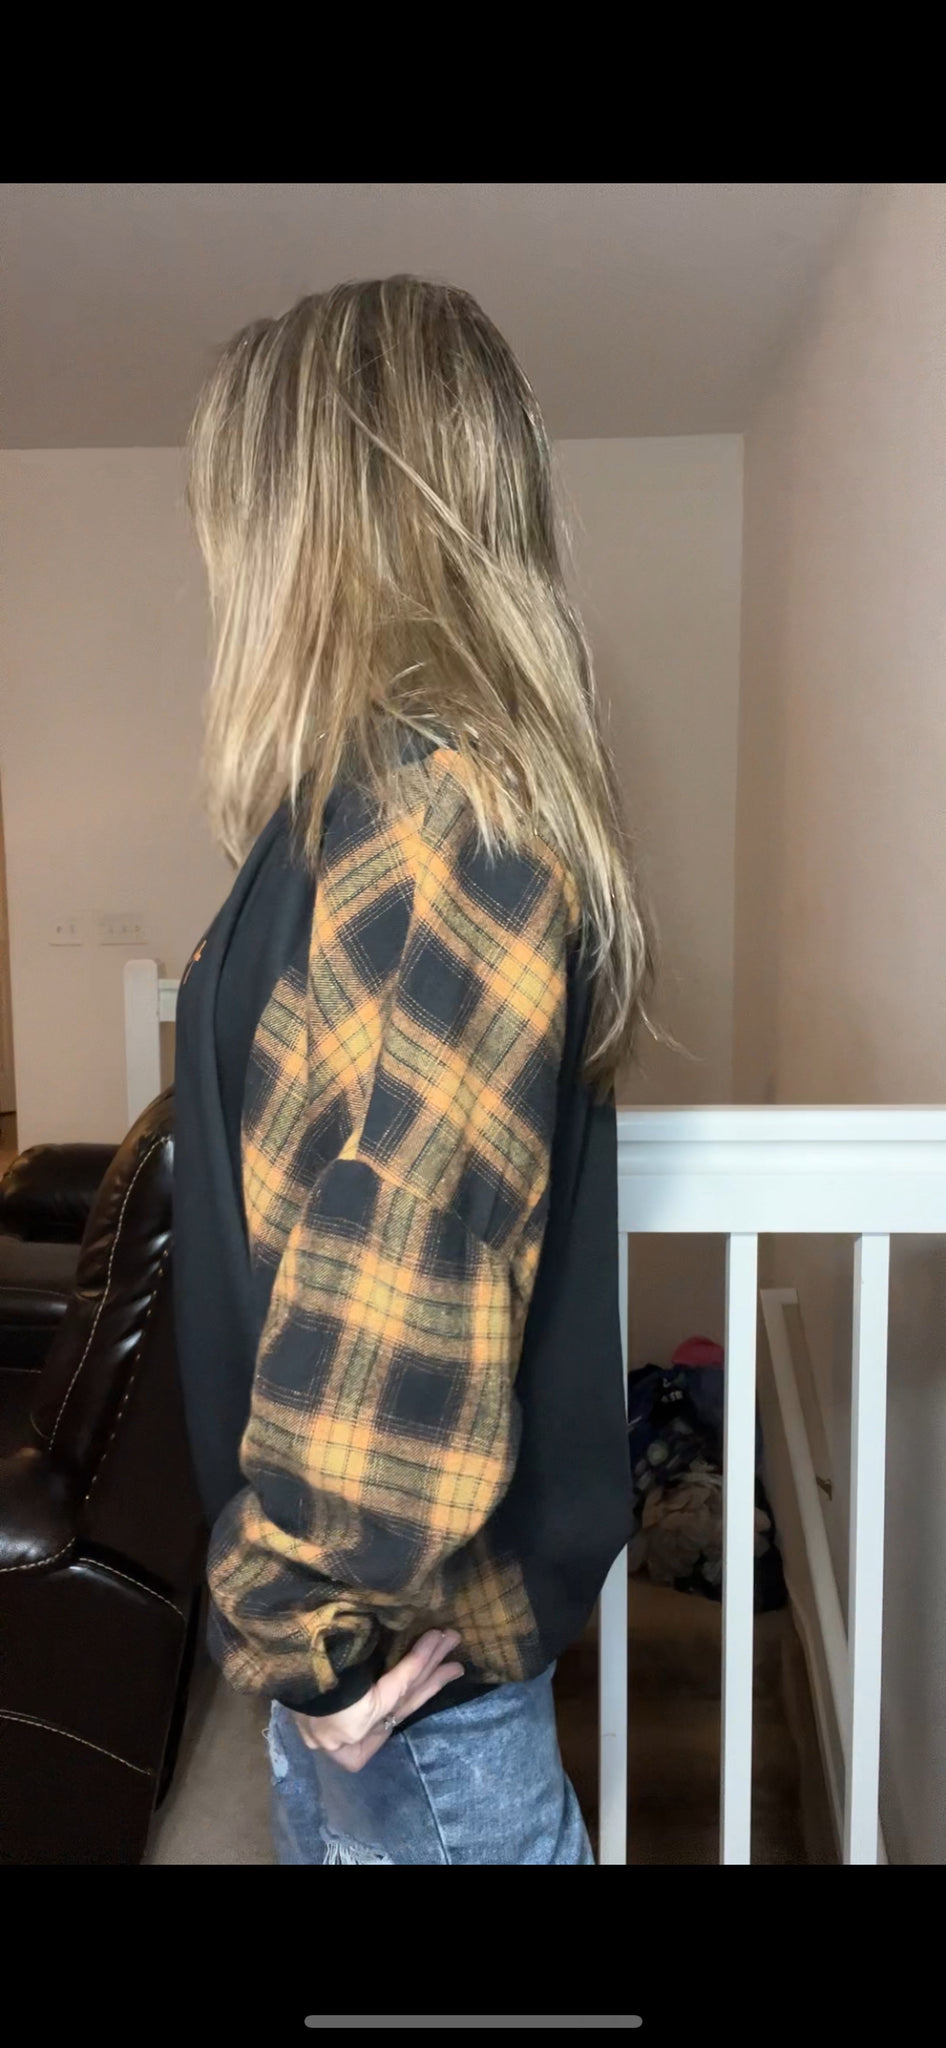 Jesus – women’s XL – thin sweatshirt with flannel sleeves ￼